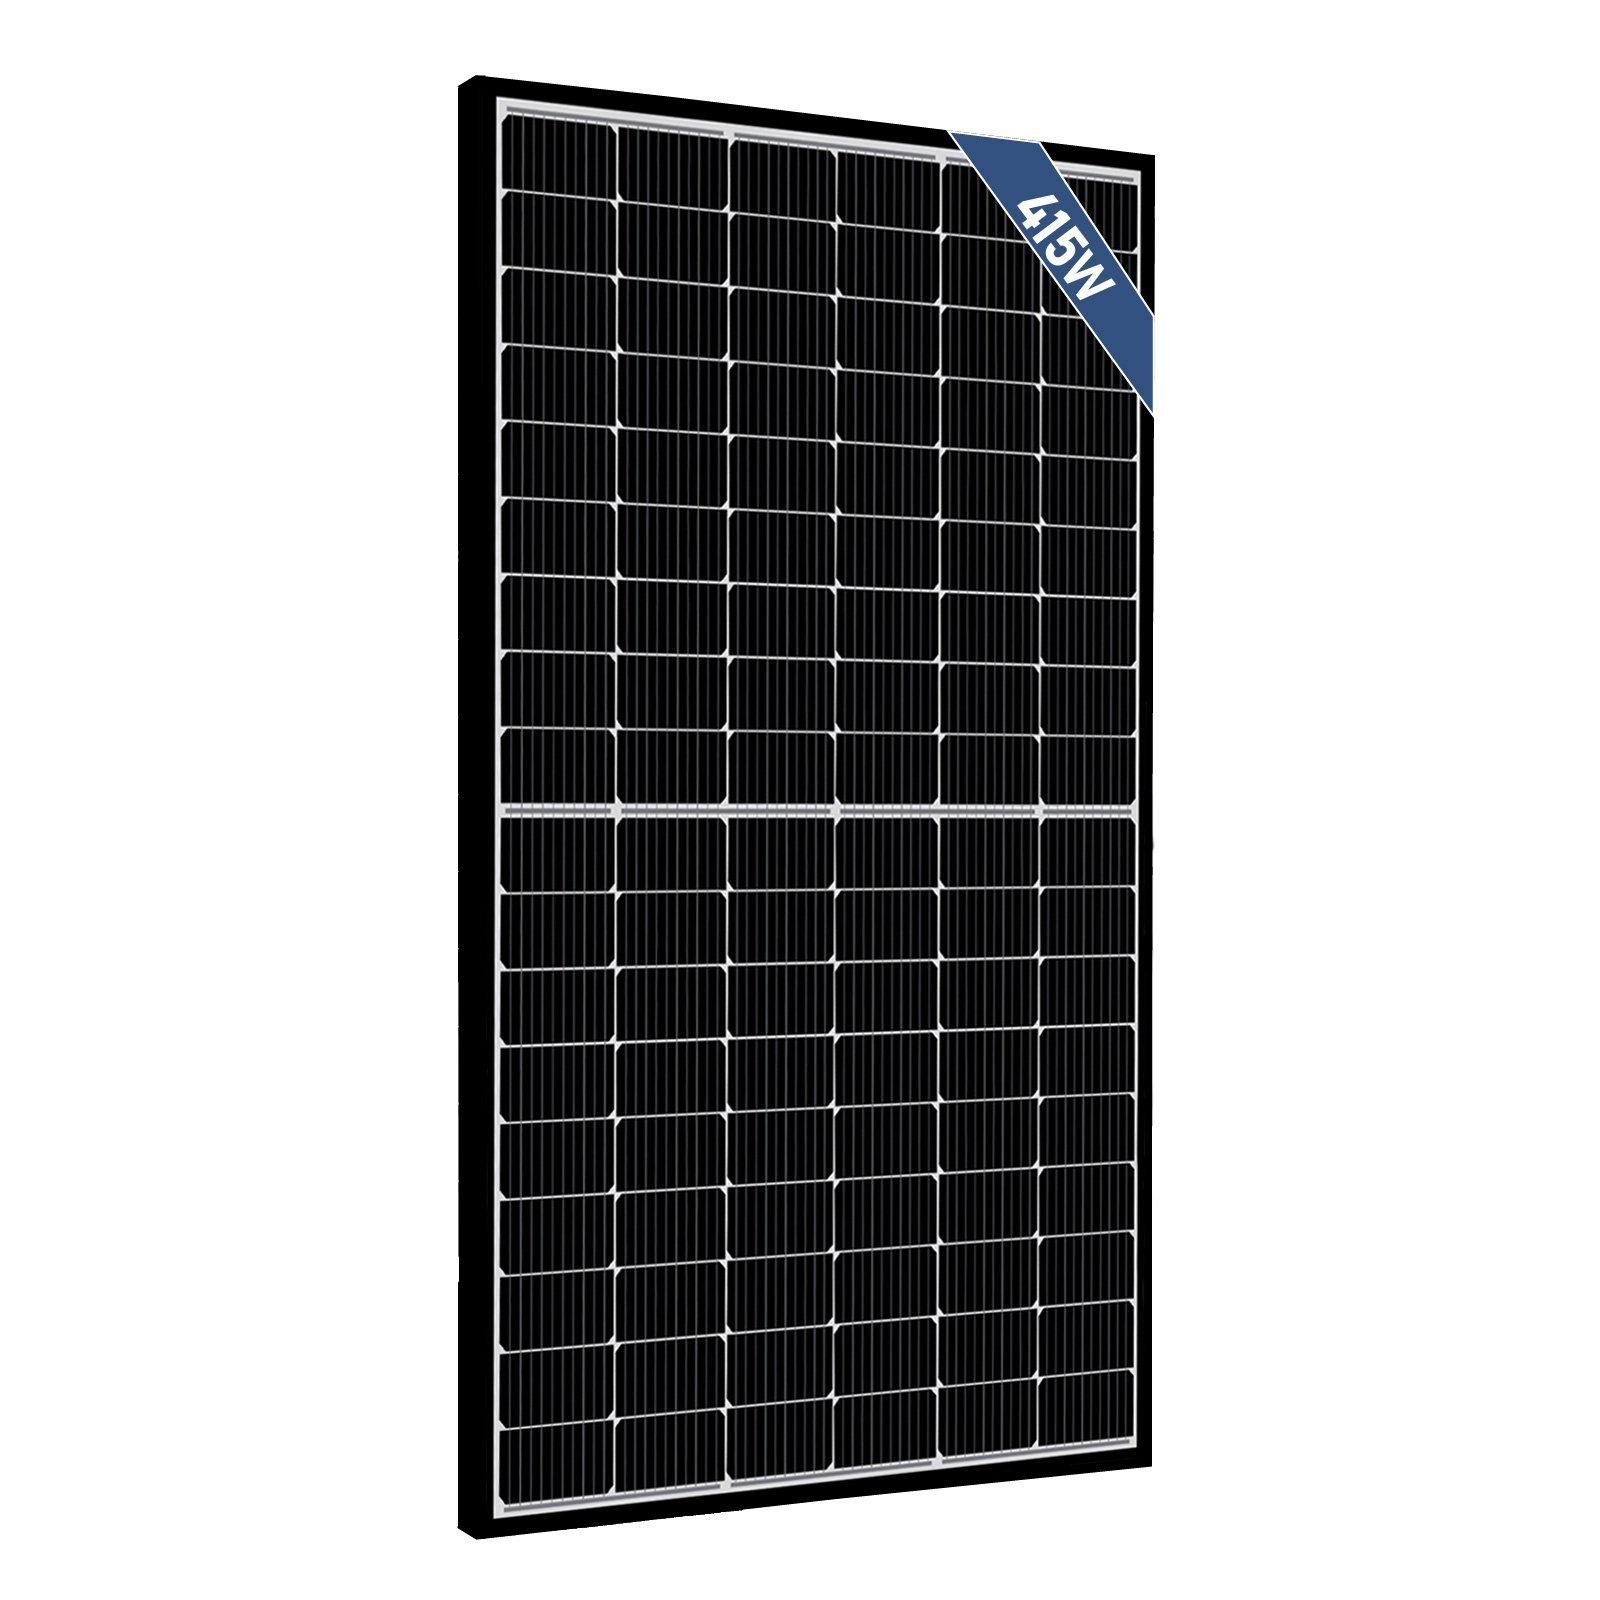 Photovoltaik Schwarz HIEFF M10 Stegpearl monokristalline Solarmodul 2x415W Solaranlage